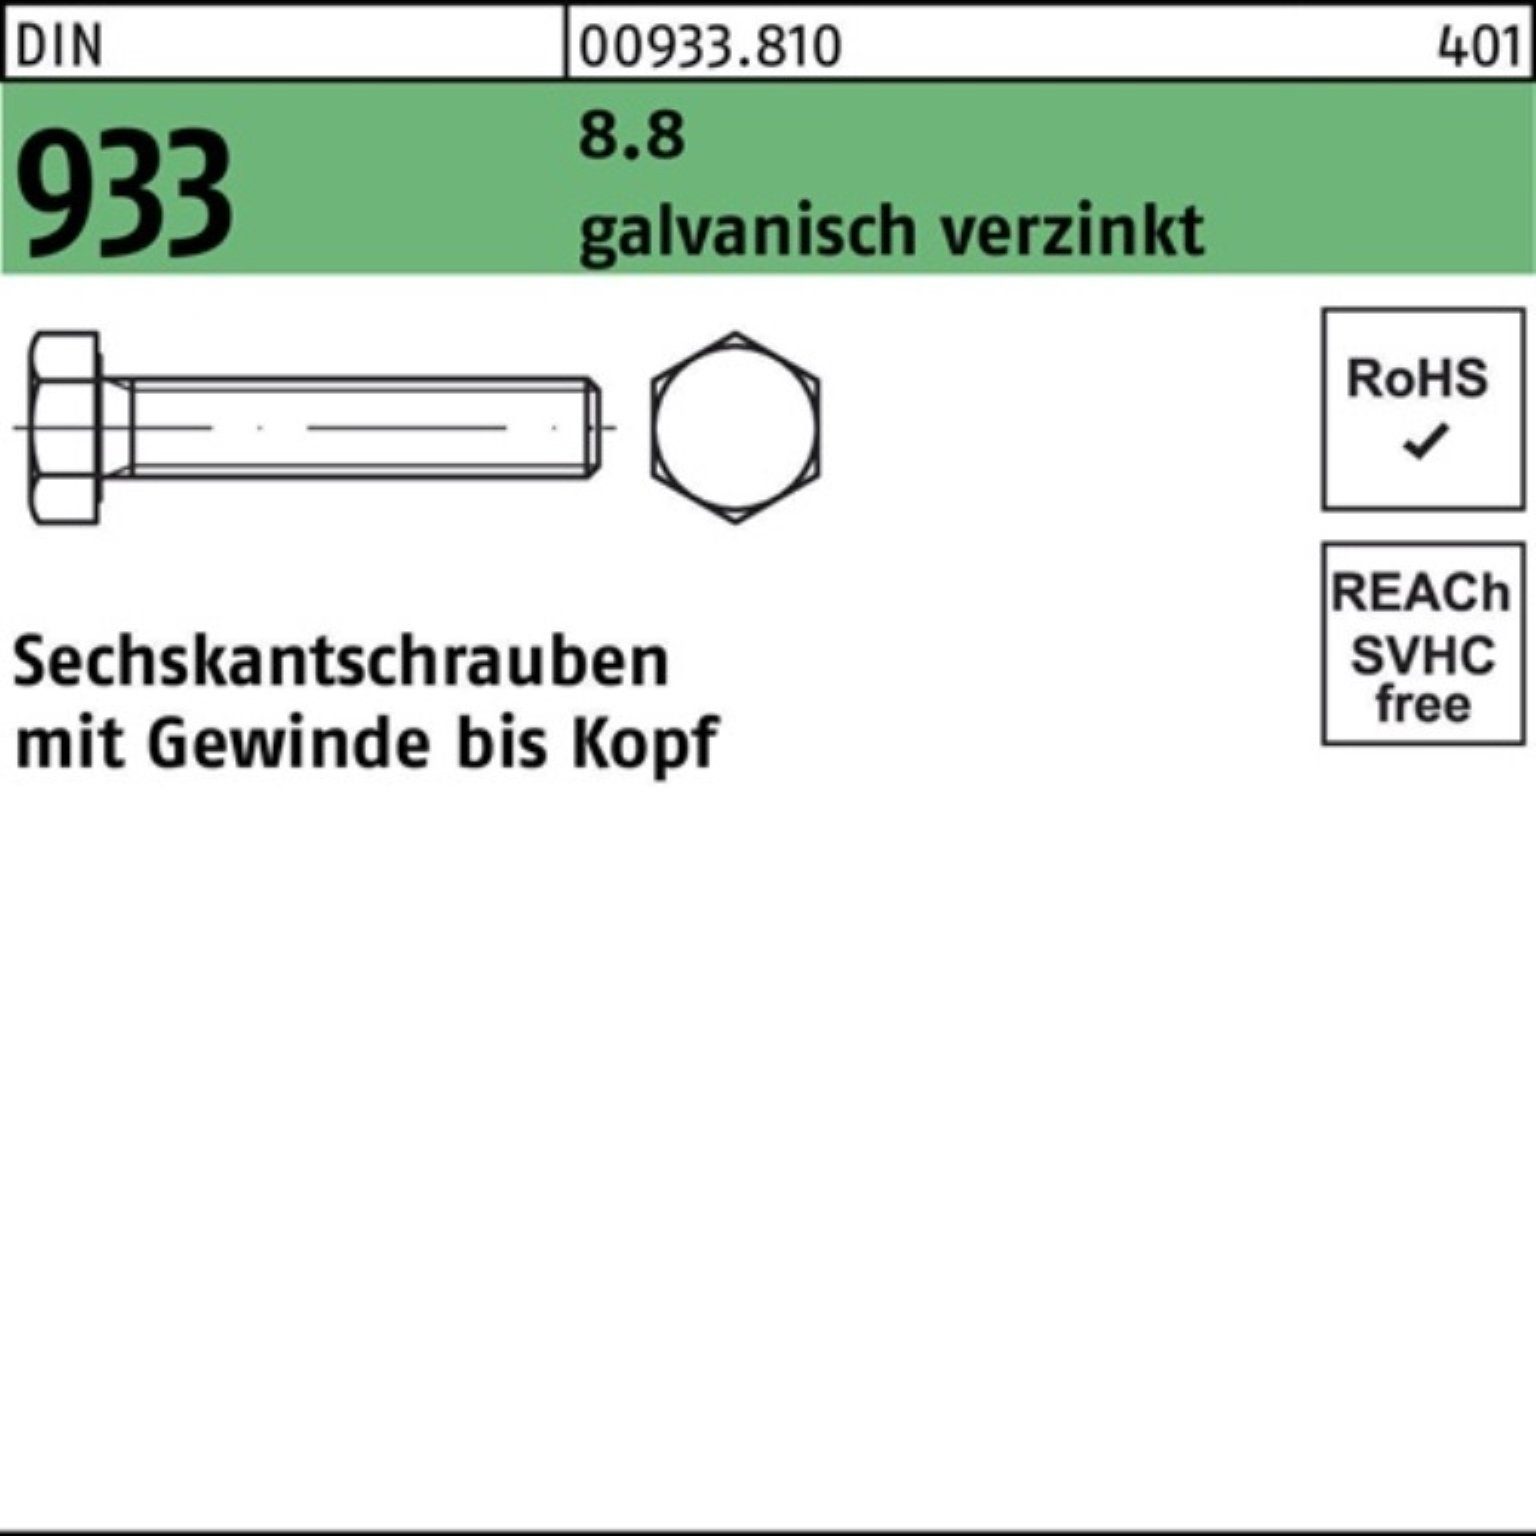 Reyher Sechskantschraube 200er galv.verz. 8.8 VG 933 Pack DIN Stü M8x 200 75 Sechskantschraube